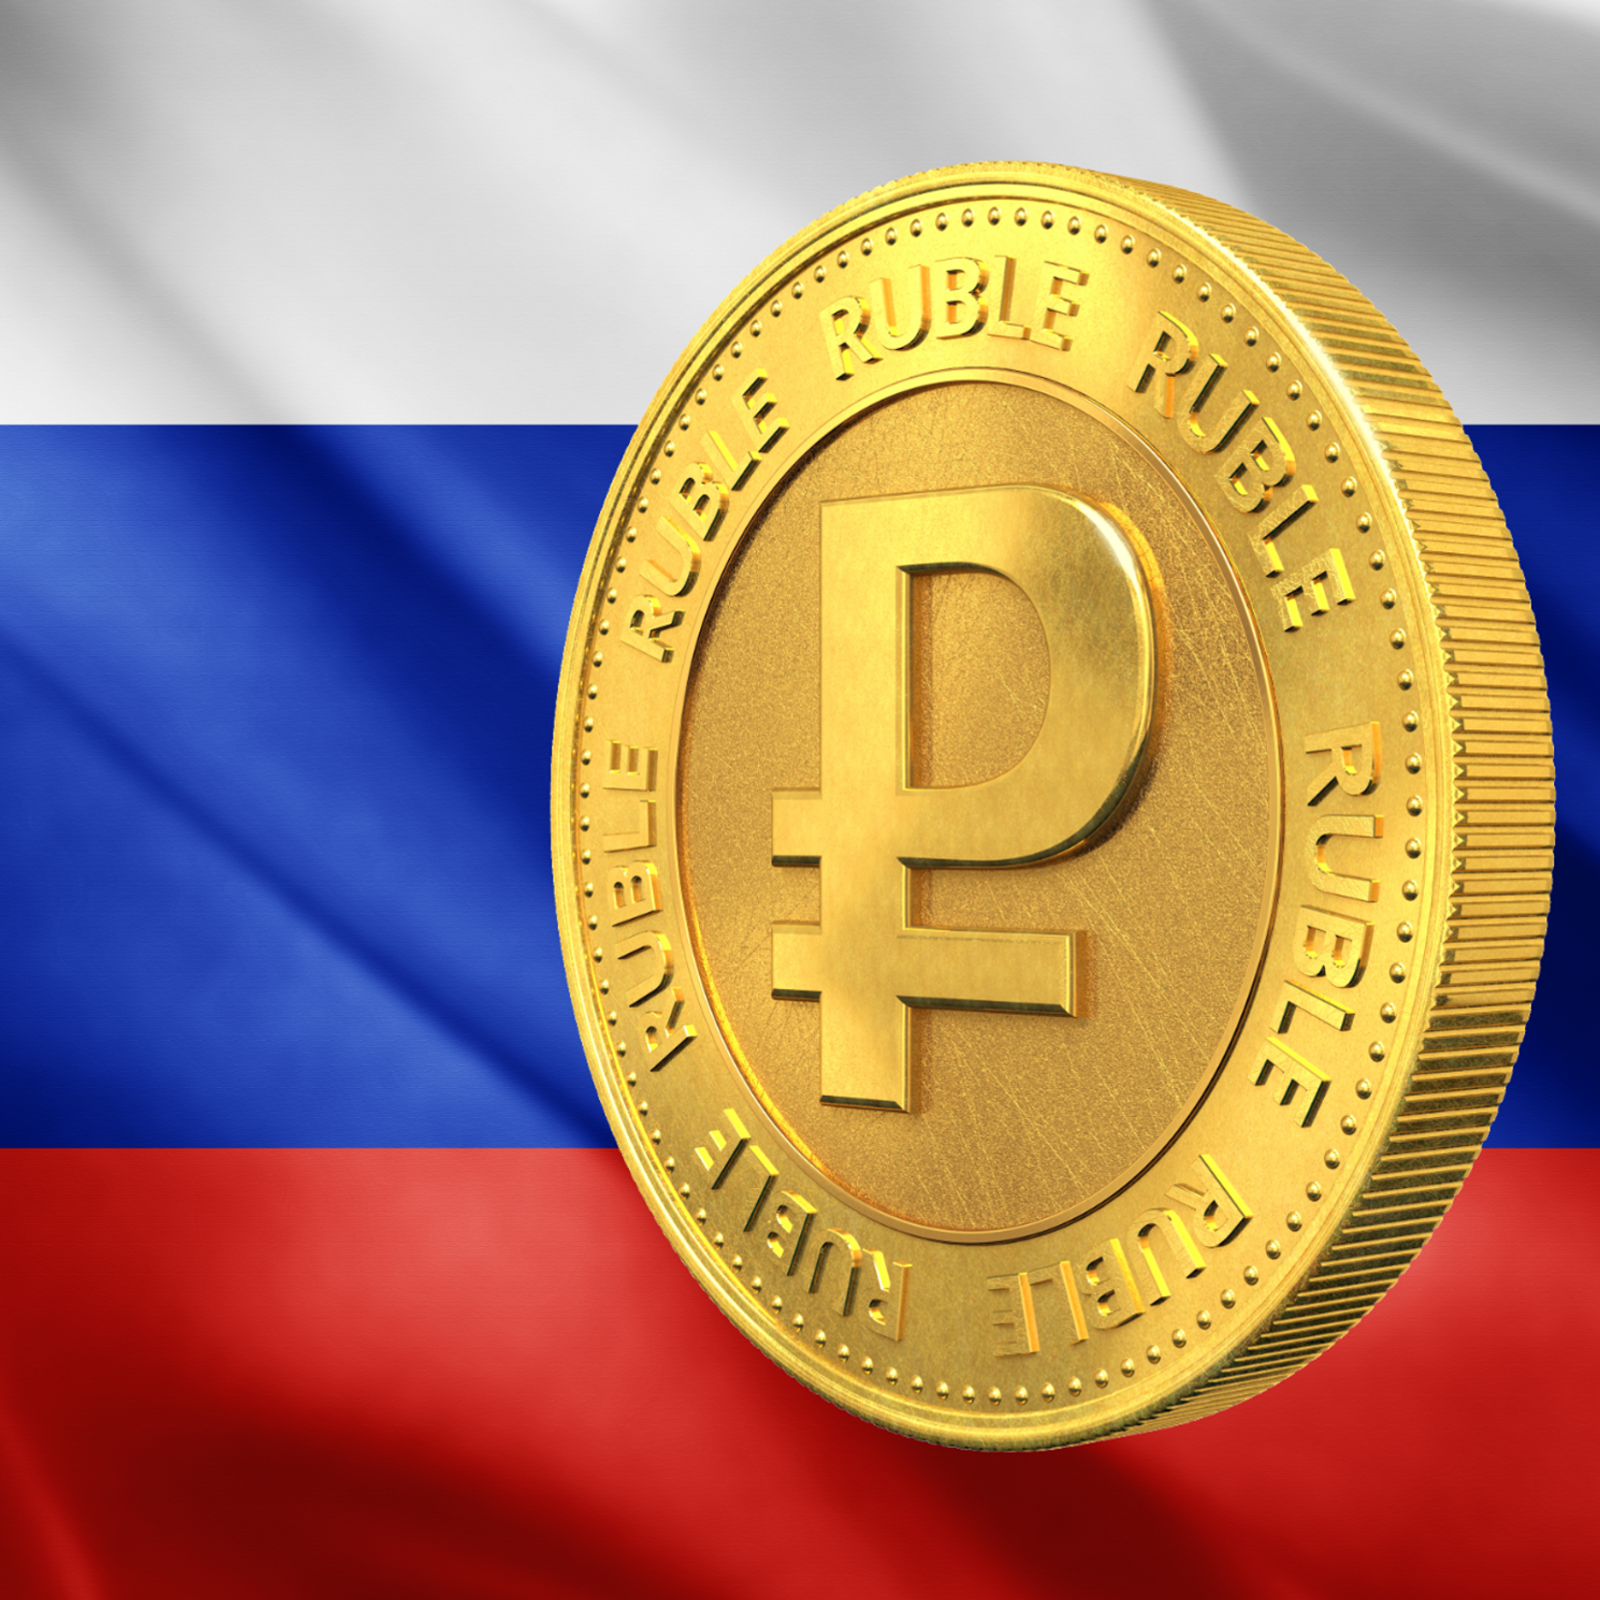 Putin Advisor Bearish on Bitcoin: ”The Cryptoruble Must Compete With Cash”